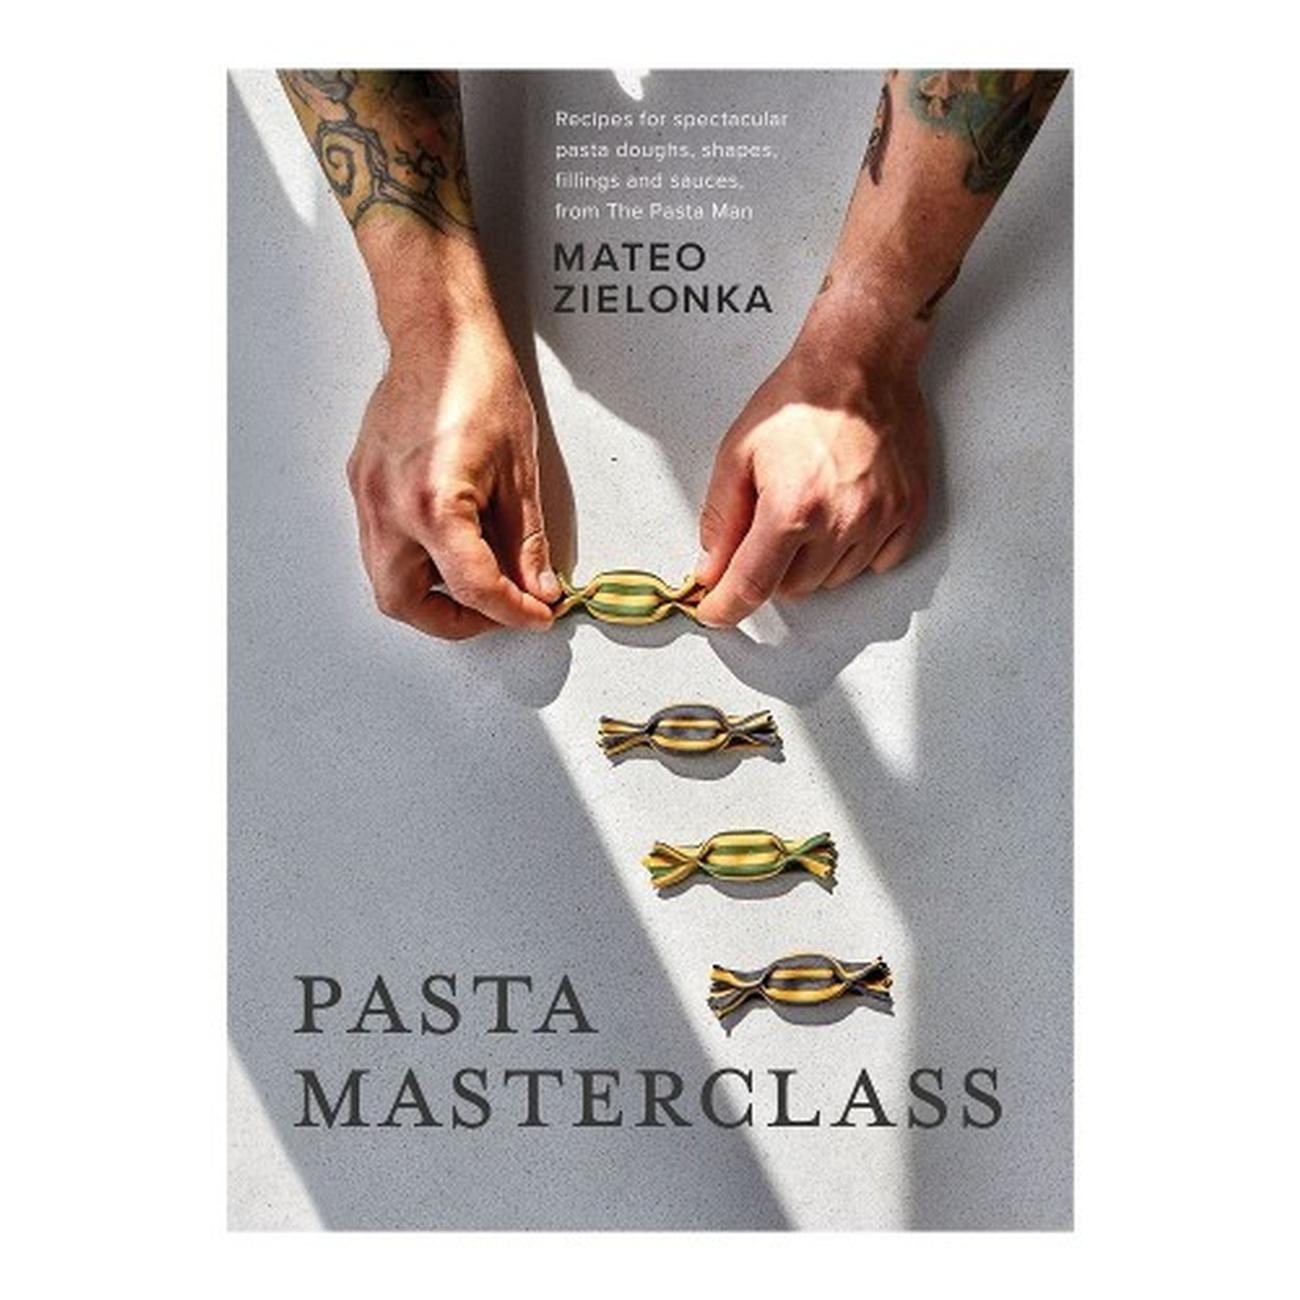 pasta-masterclass-by-mateo-zielonka - Pasta Masterclass by Mateo Zielonka